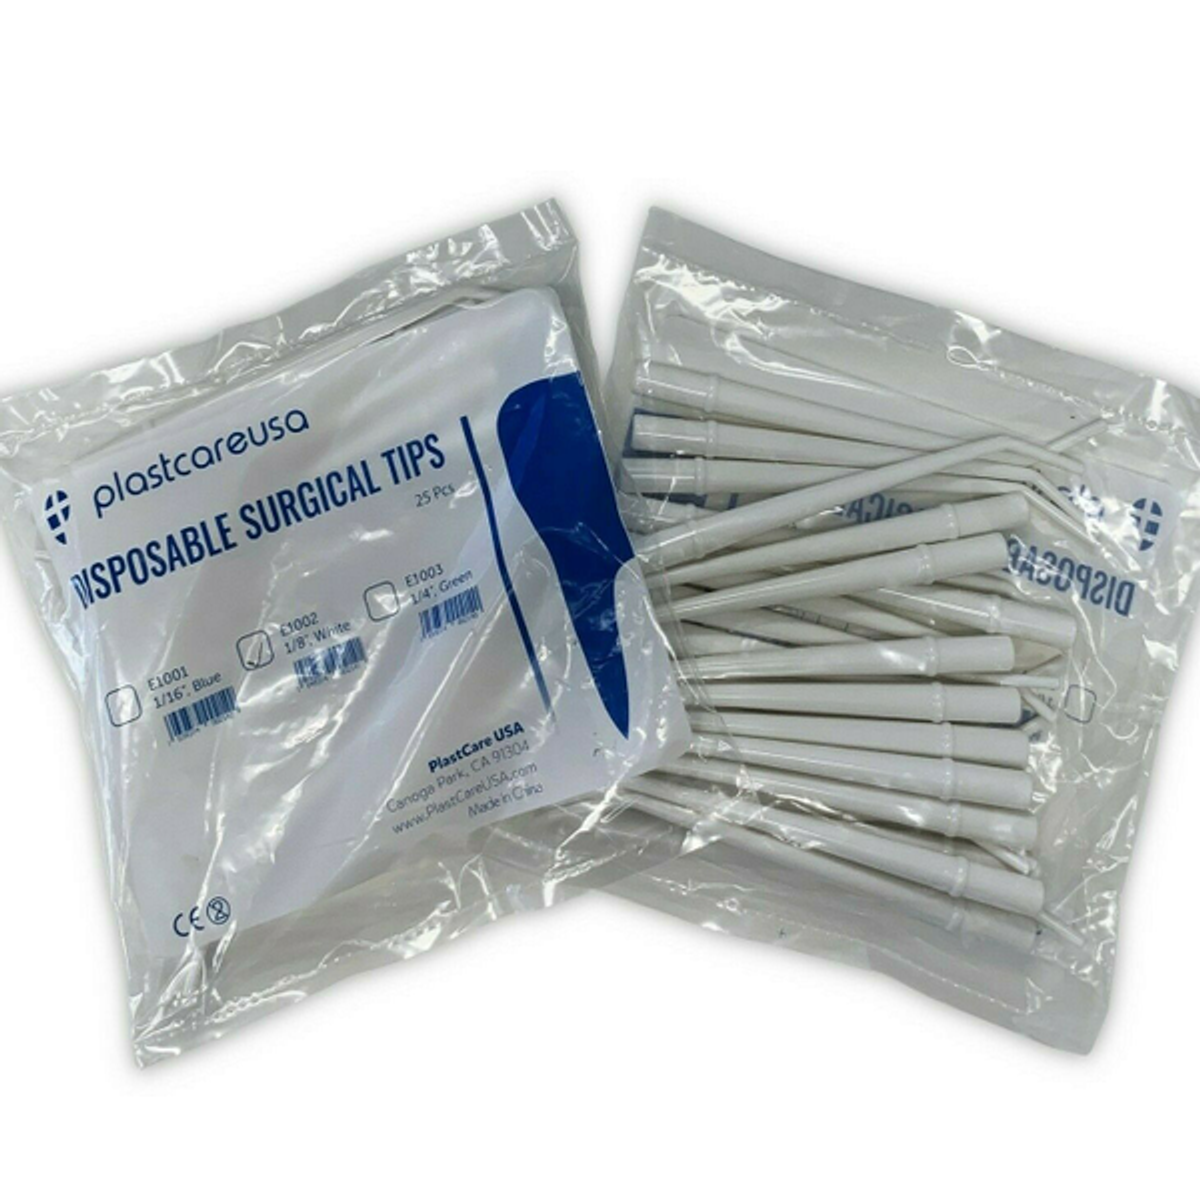 PlastCare Surgical Aspirator Tips, Medium 1/8”, White